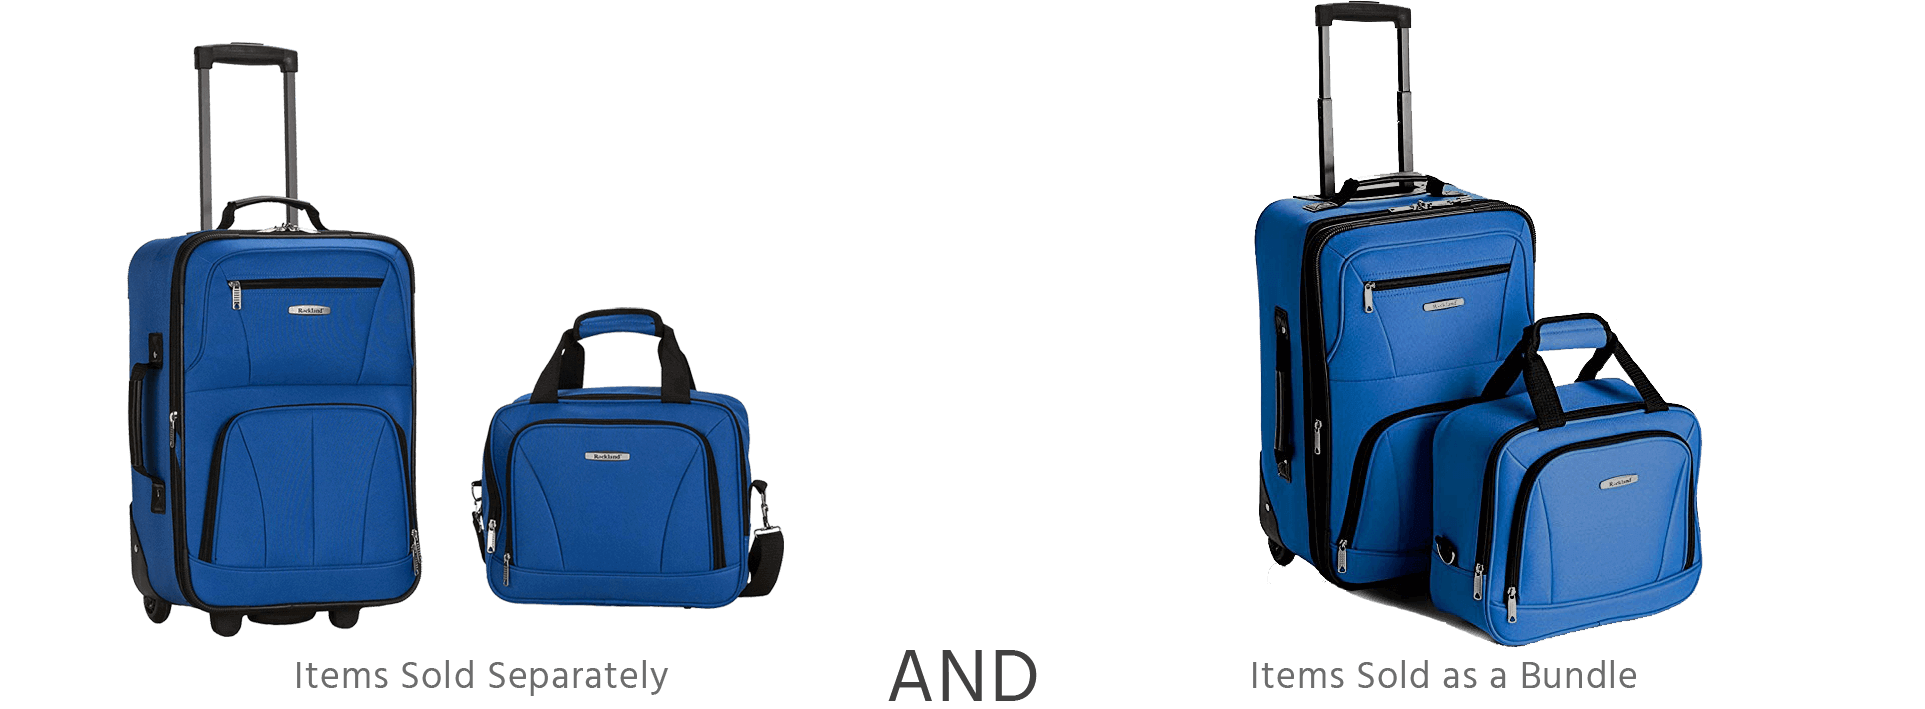 luggage bundle kit example